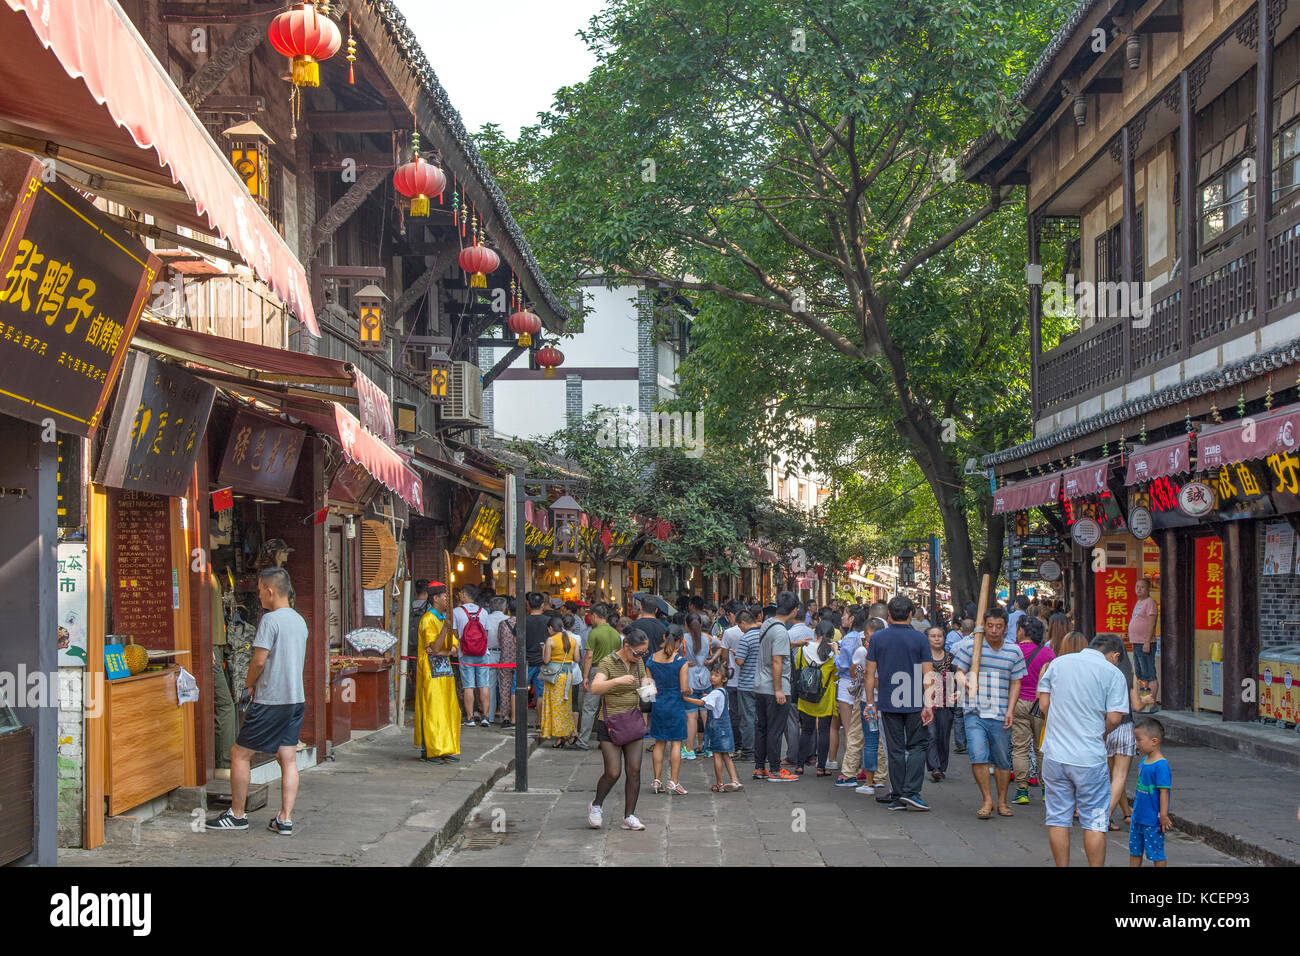 Straße in der alten Stadt ciqikou, Chongqing, China Stockfoto